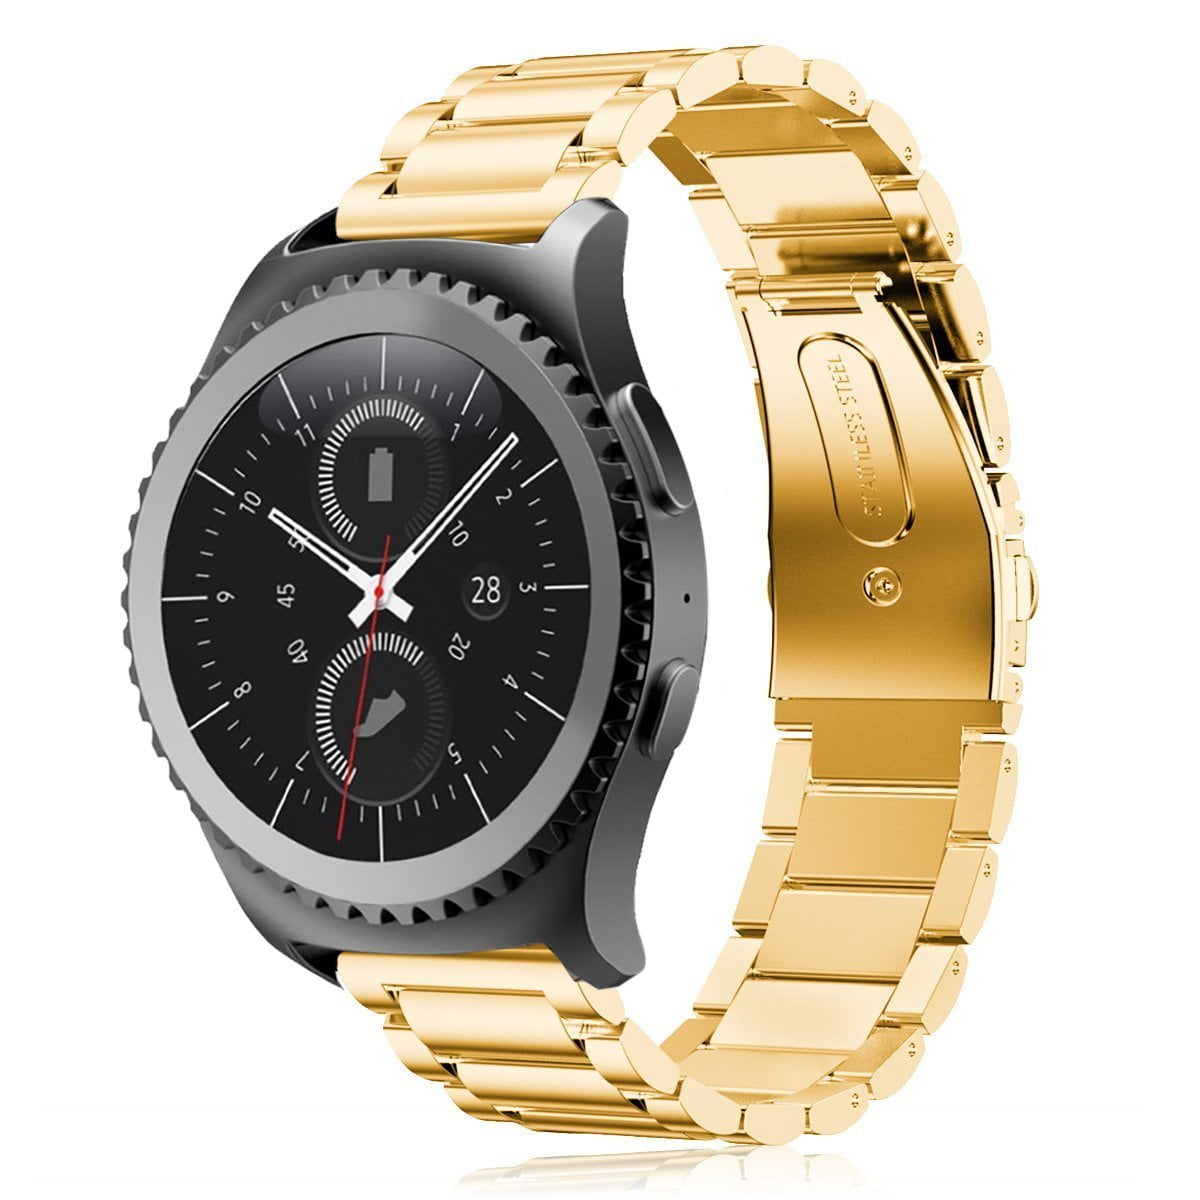 Galaxy watch Classic 42mm золотые. Gear s3 золото. Застежка часов самсунг. Застежка для часов Galaxy watch. Samsung watch classic 42mm